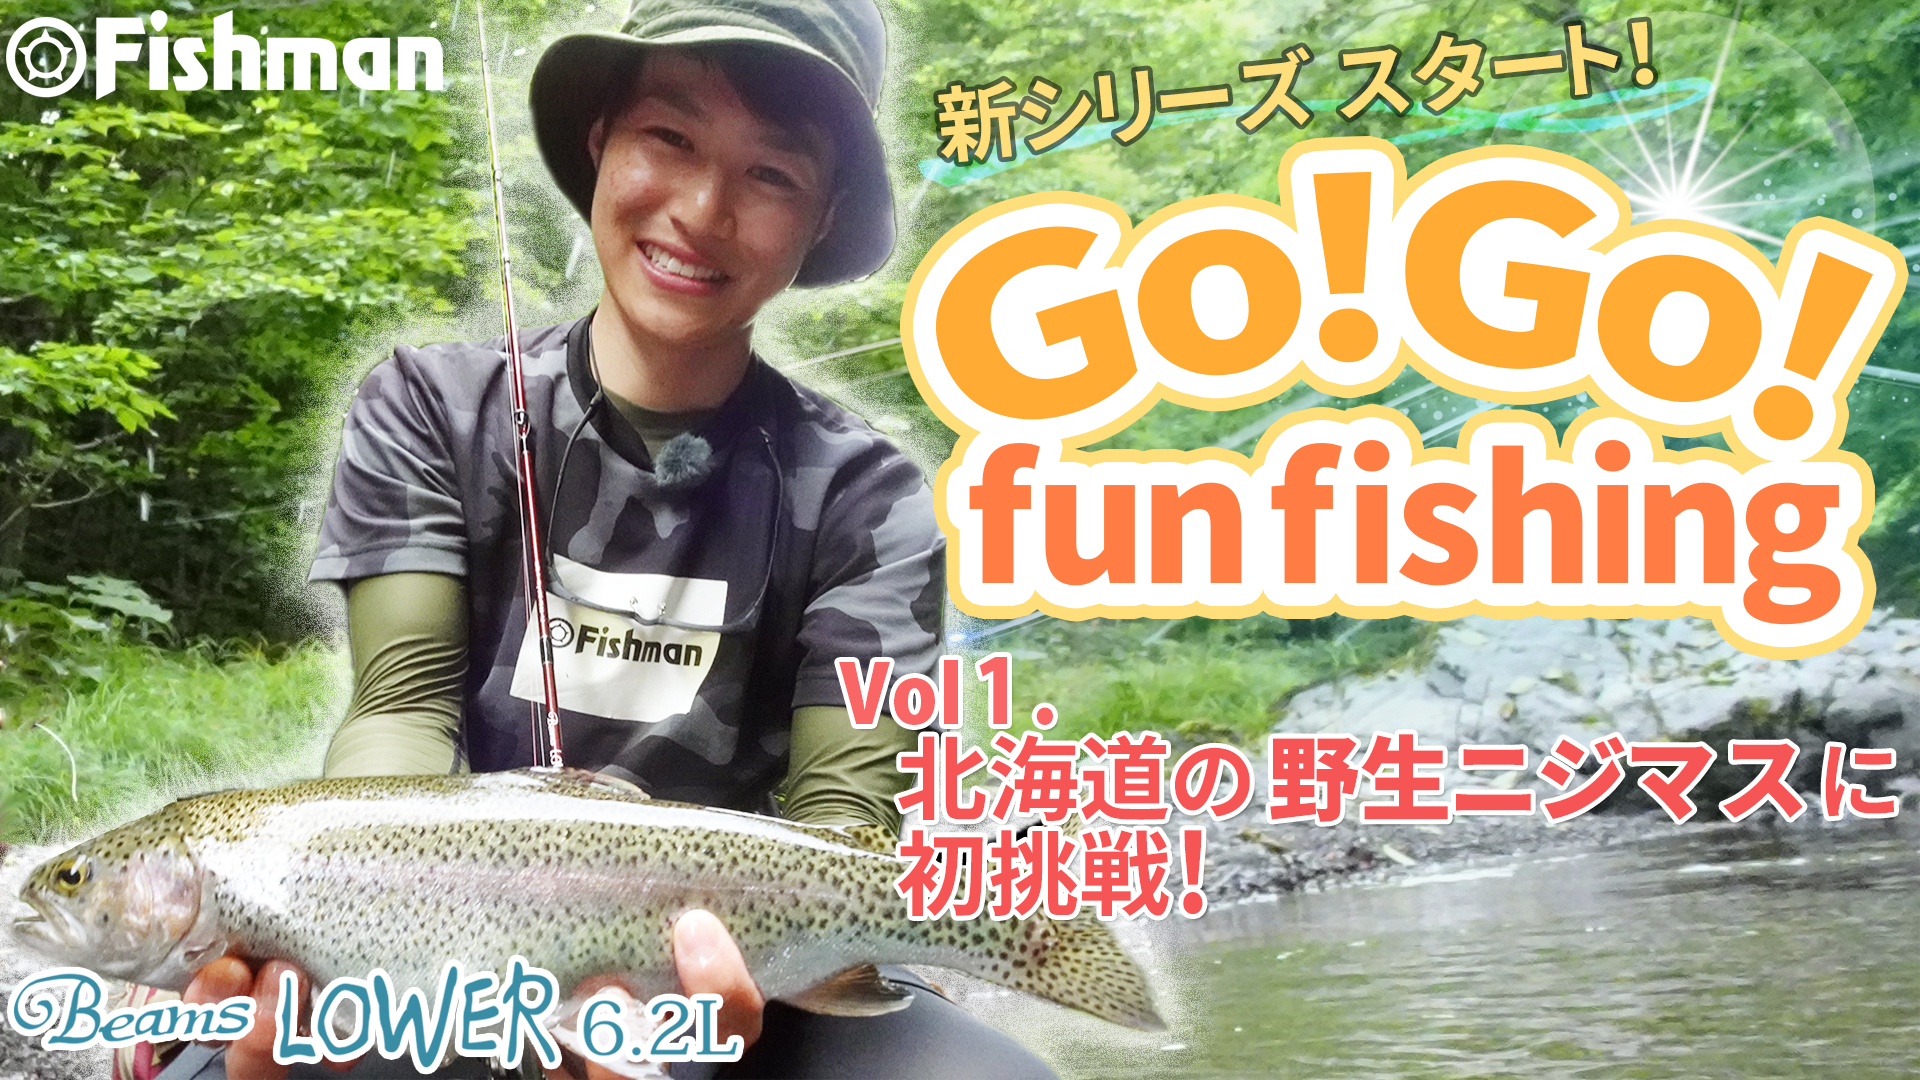 FishmanTV 新シリーズ『高木響 GO!GO! fun fishing』公開